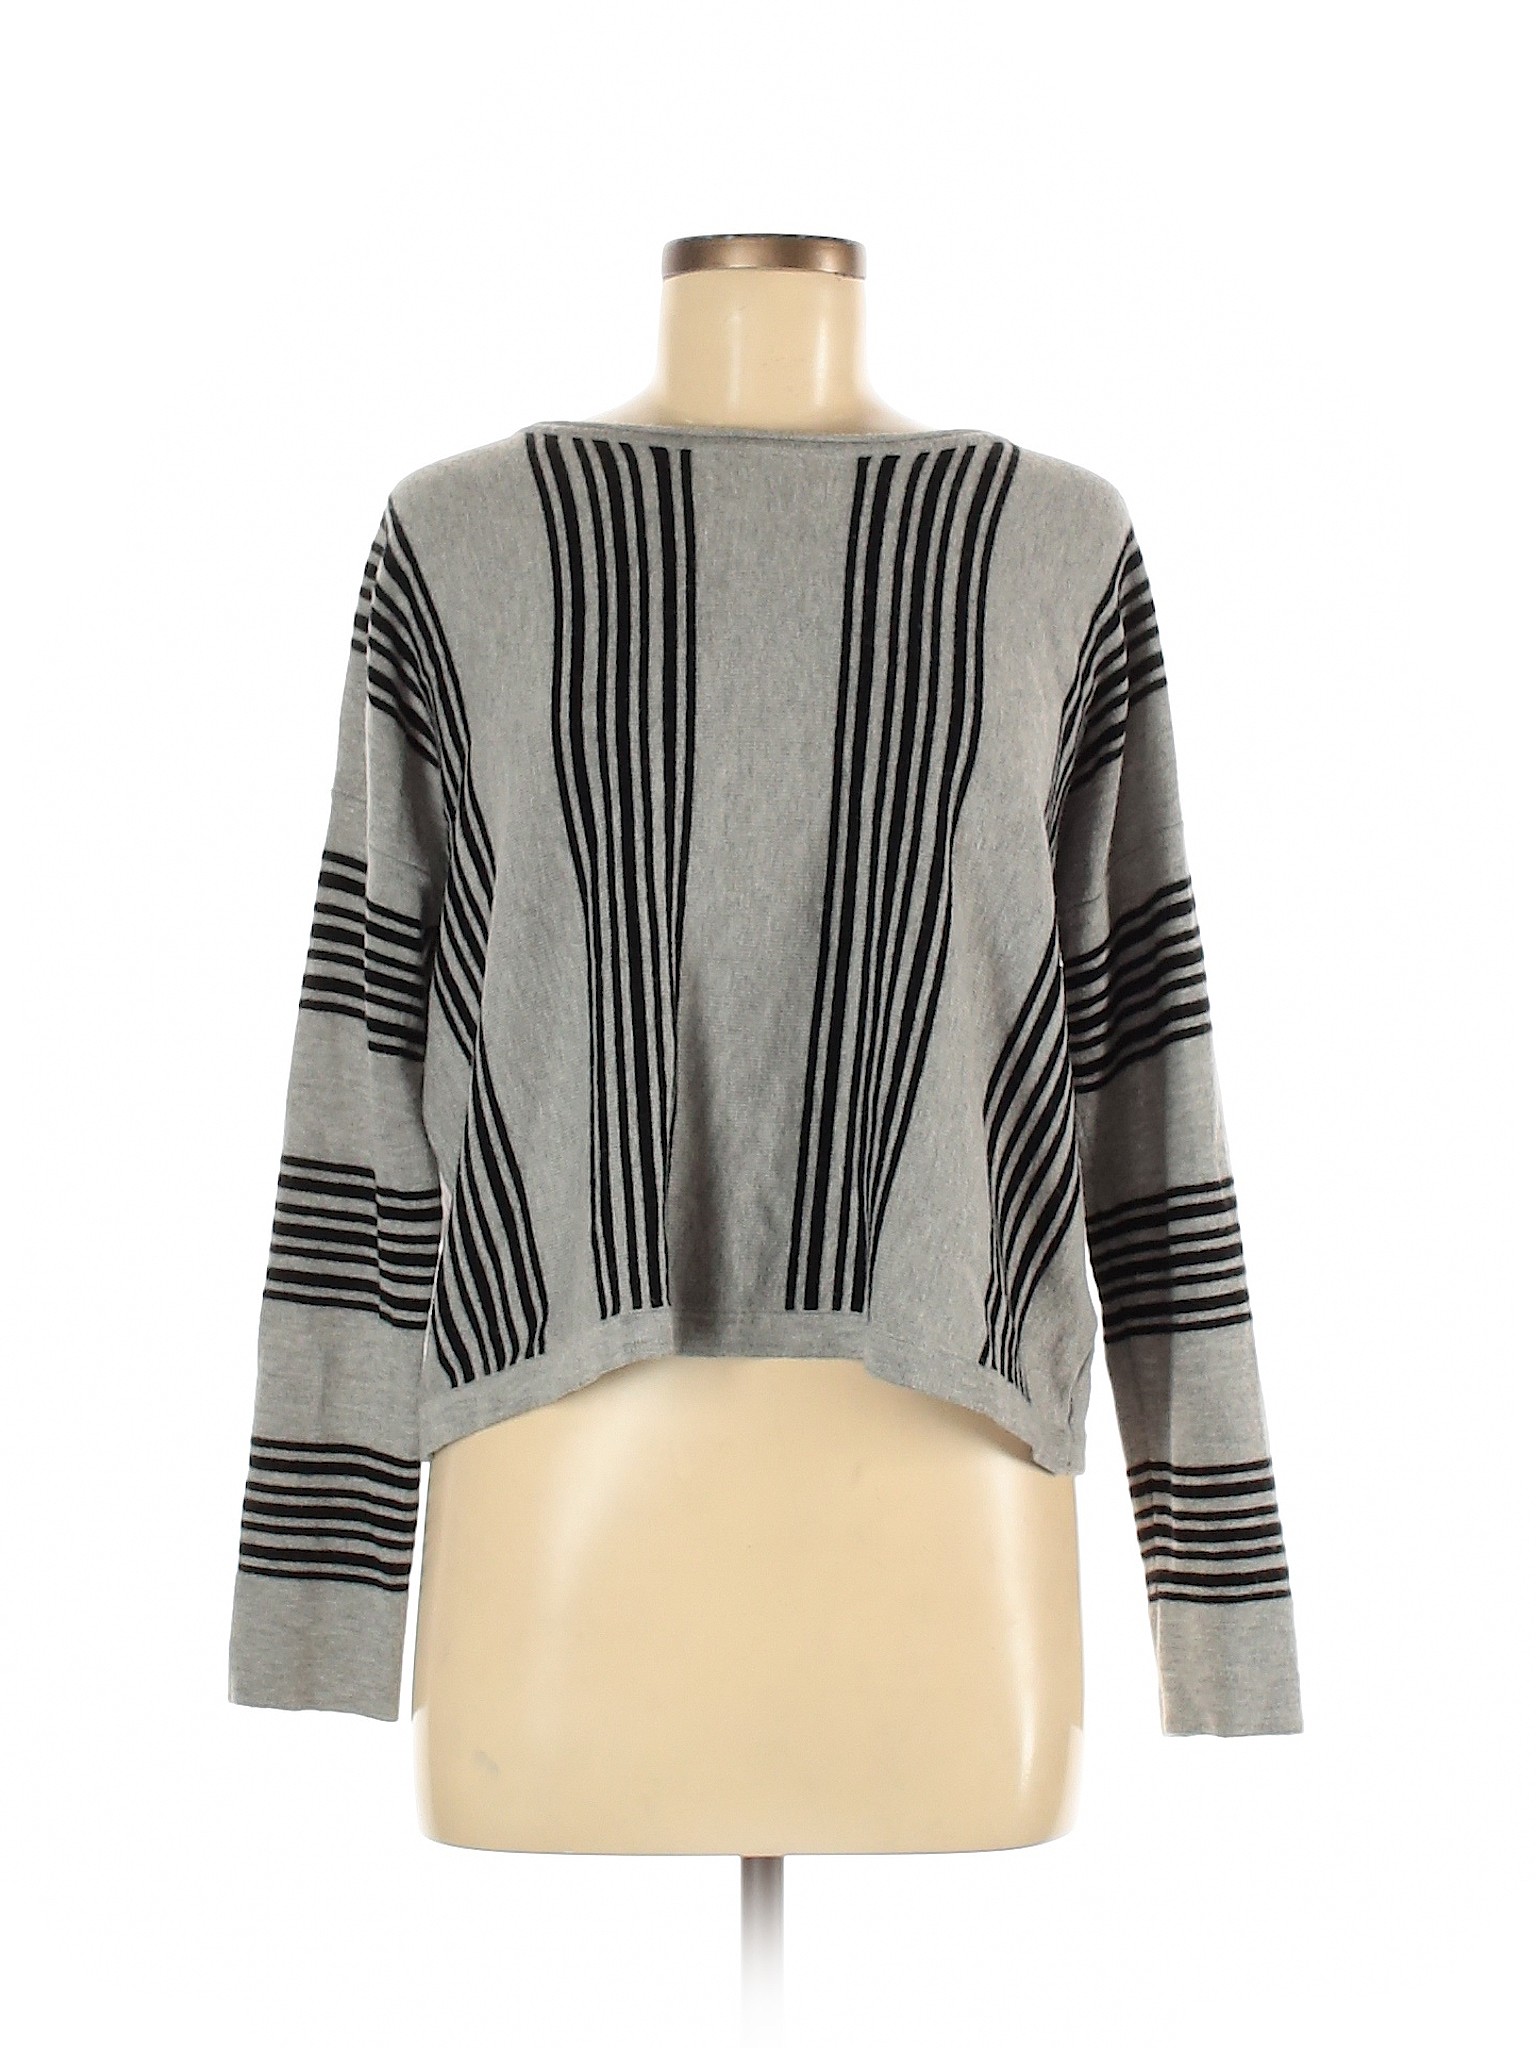 Philosophy Republic Clothing Women Gray Pullover Sweater M | eBay